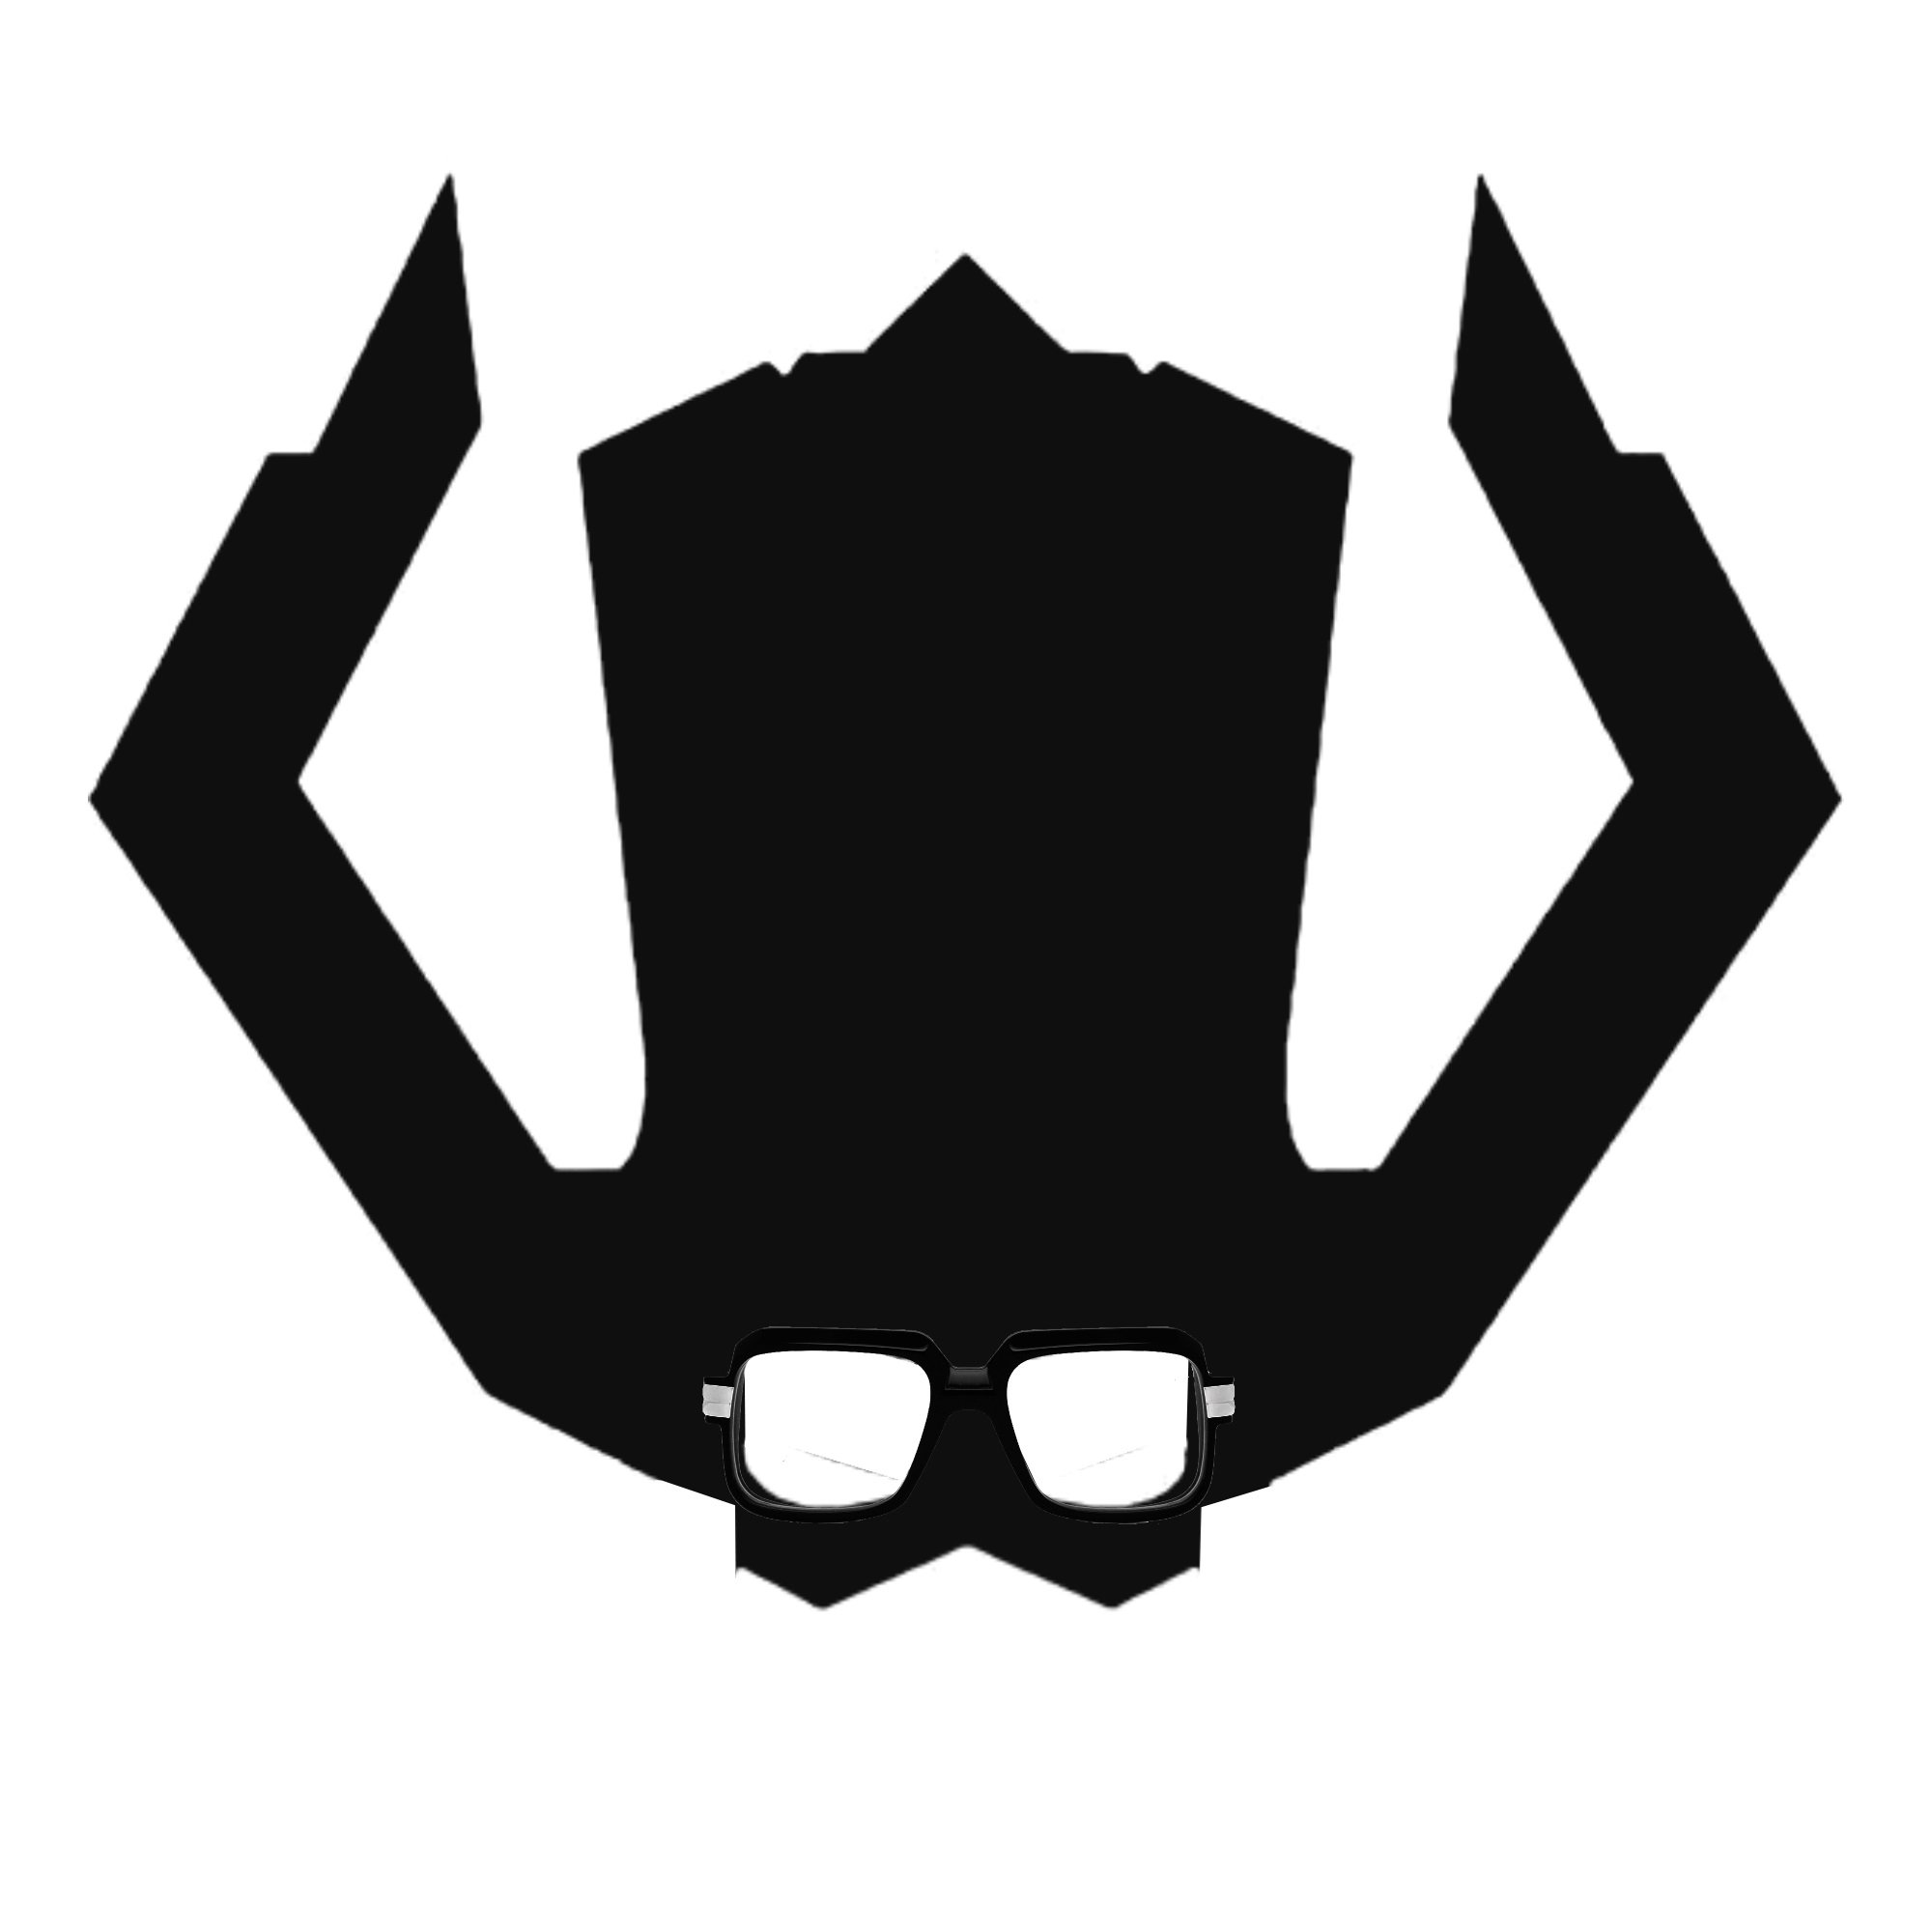 Cos-G Galactus logo b (1).jpg